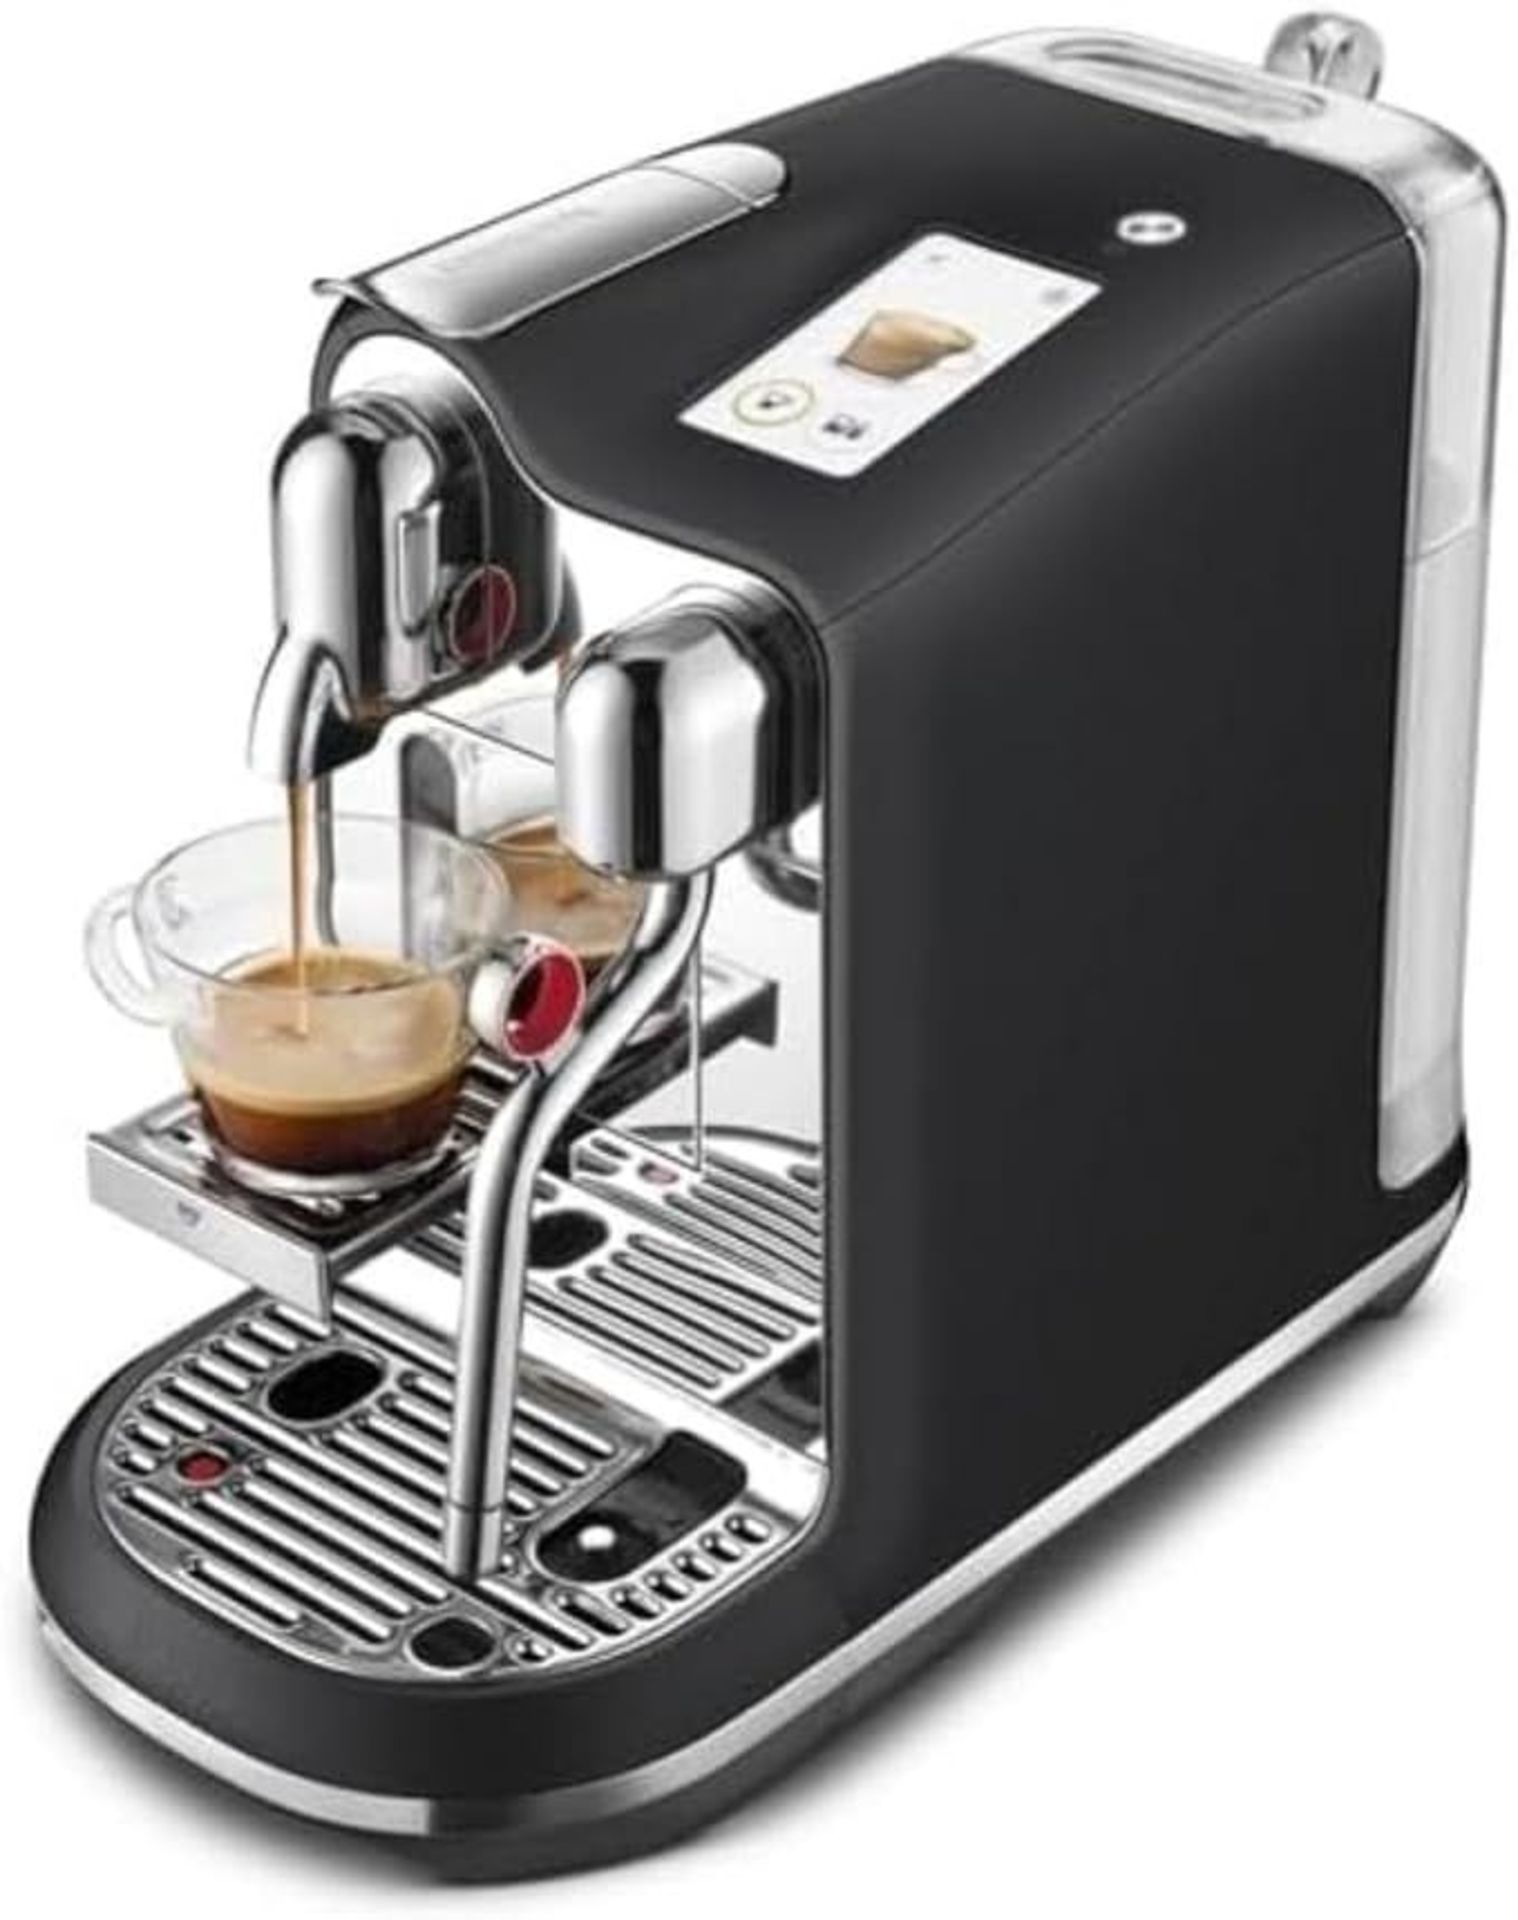 Nespresso Creatista Pro Automatic Pod Coffee Machine with milk frother wand for Espresso, Cappuccino